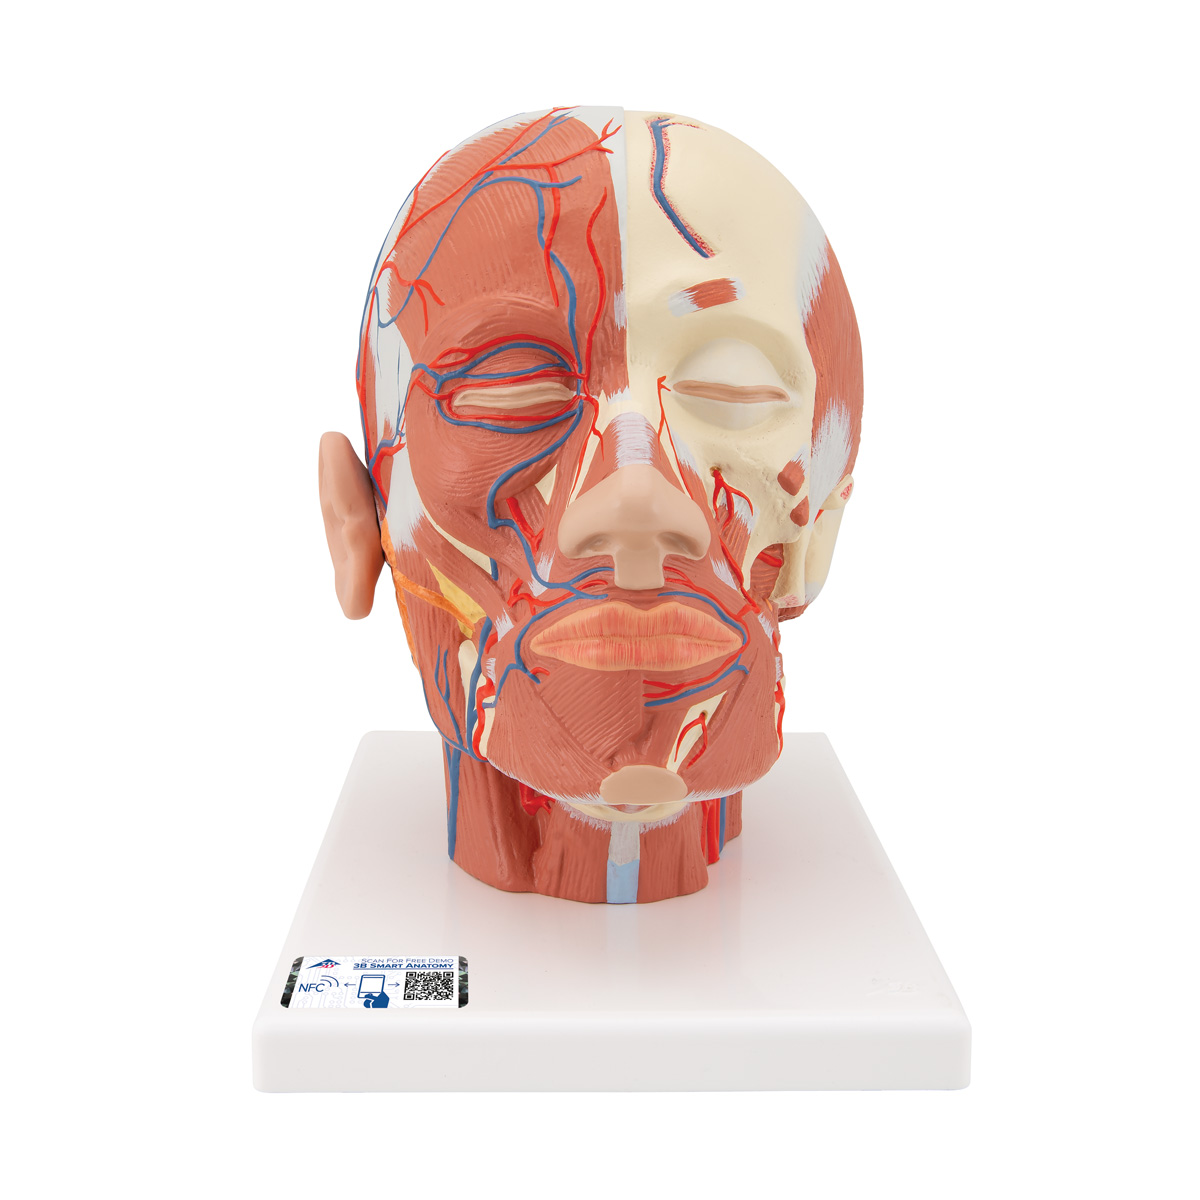 Kopfmodell mit Muskulatur & Blutgefäßen - 3B Smart Anatomy, Bestellnummer 1001240, VB128, 3B Scientific